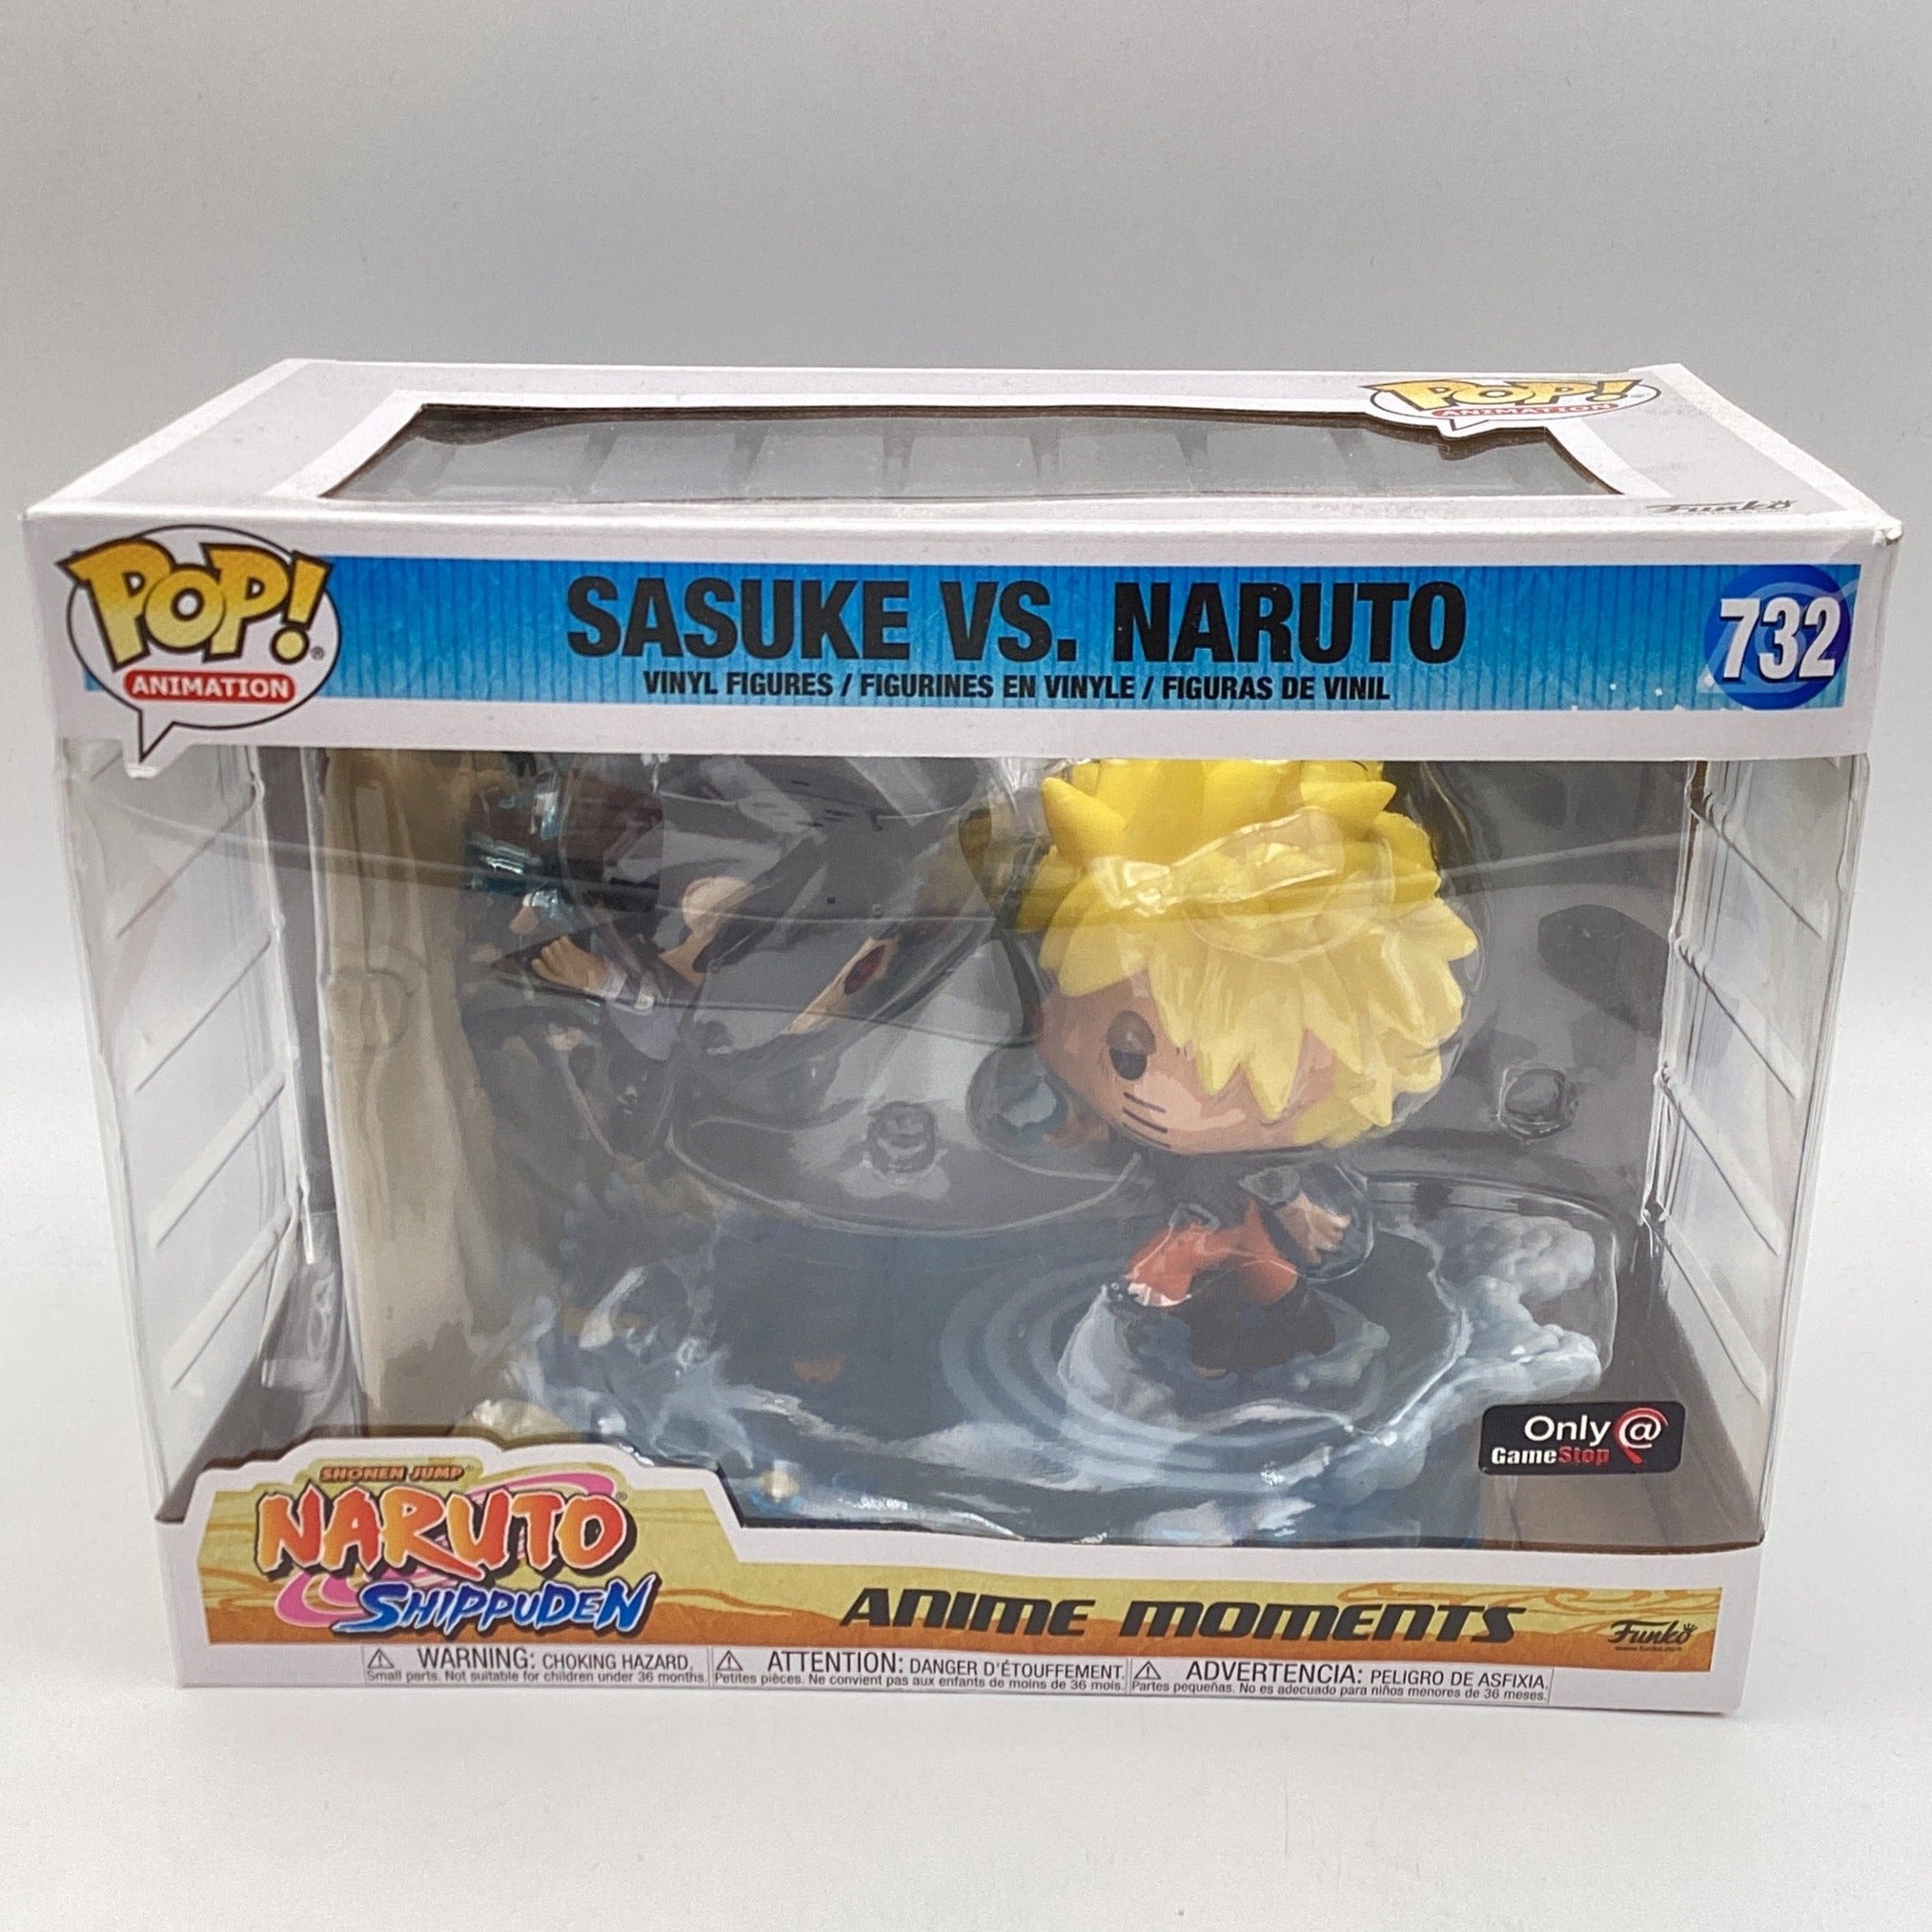 Figurine Sasuke Vs Naruto / Naruto Anime Moments / Funko Pop Animation 732